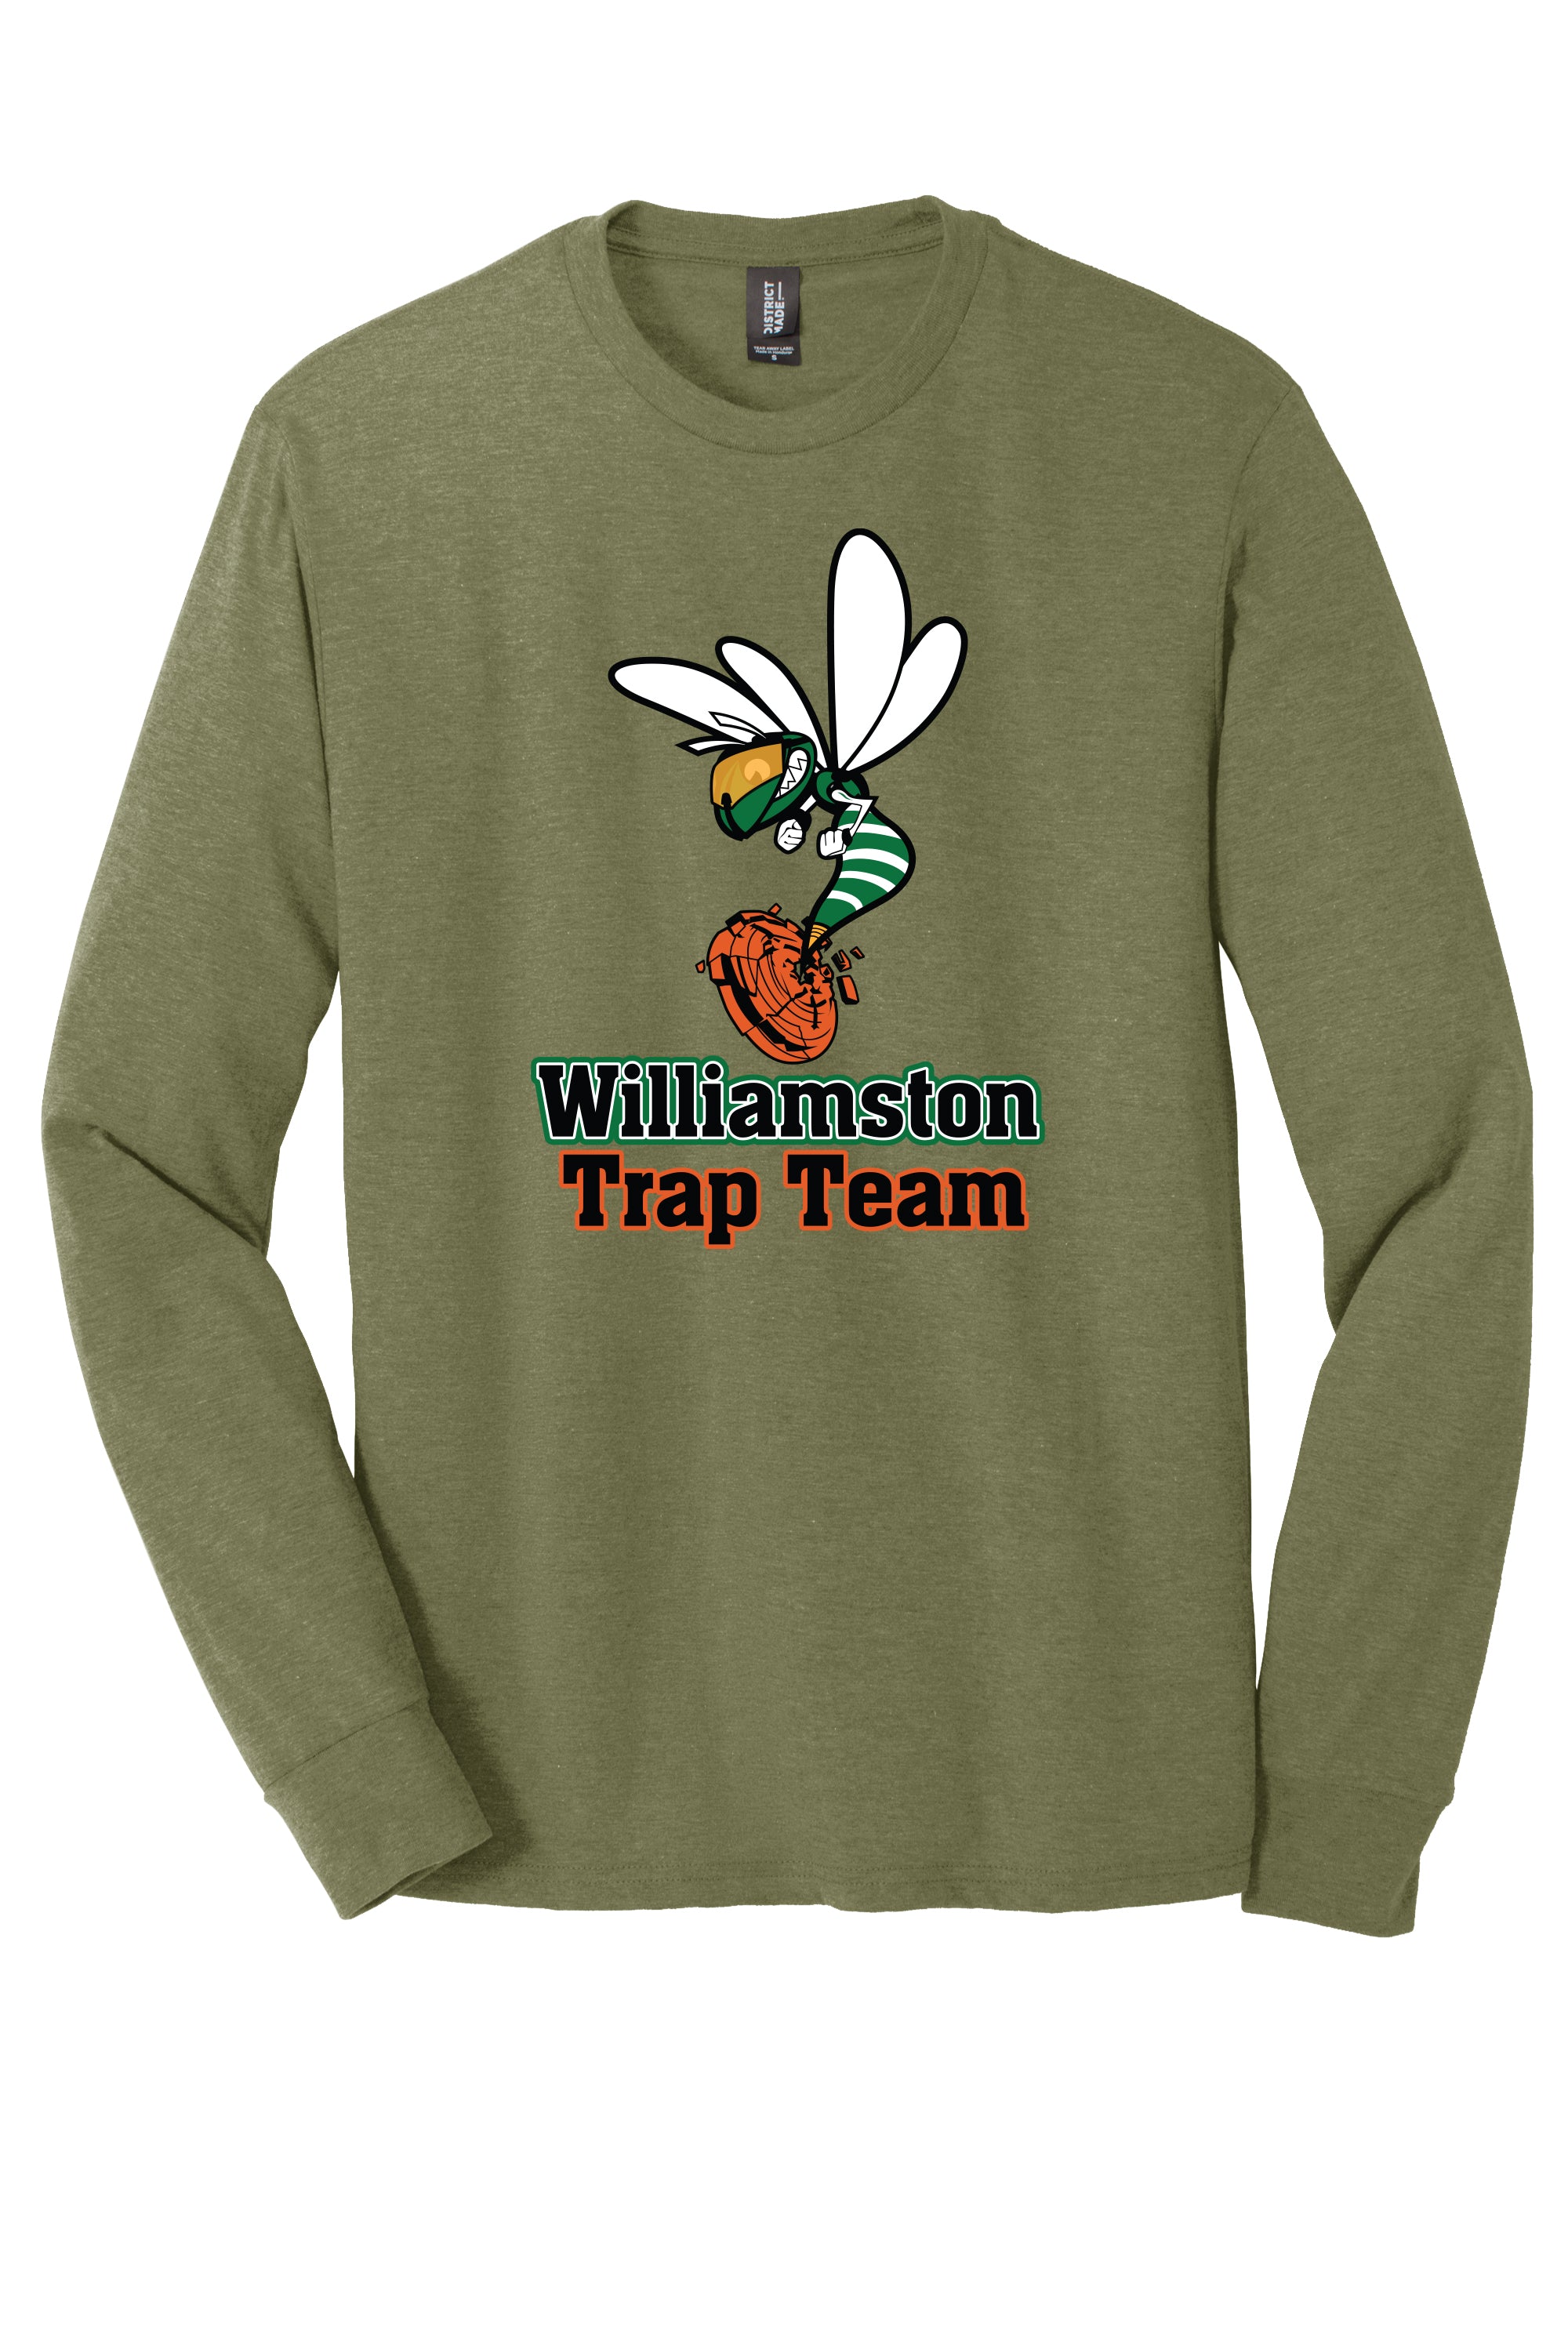 Williamston Trap Team - Long Sleeve Tee